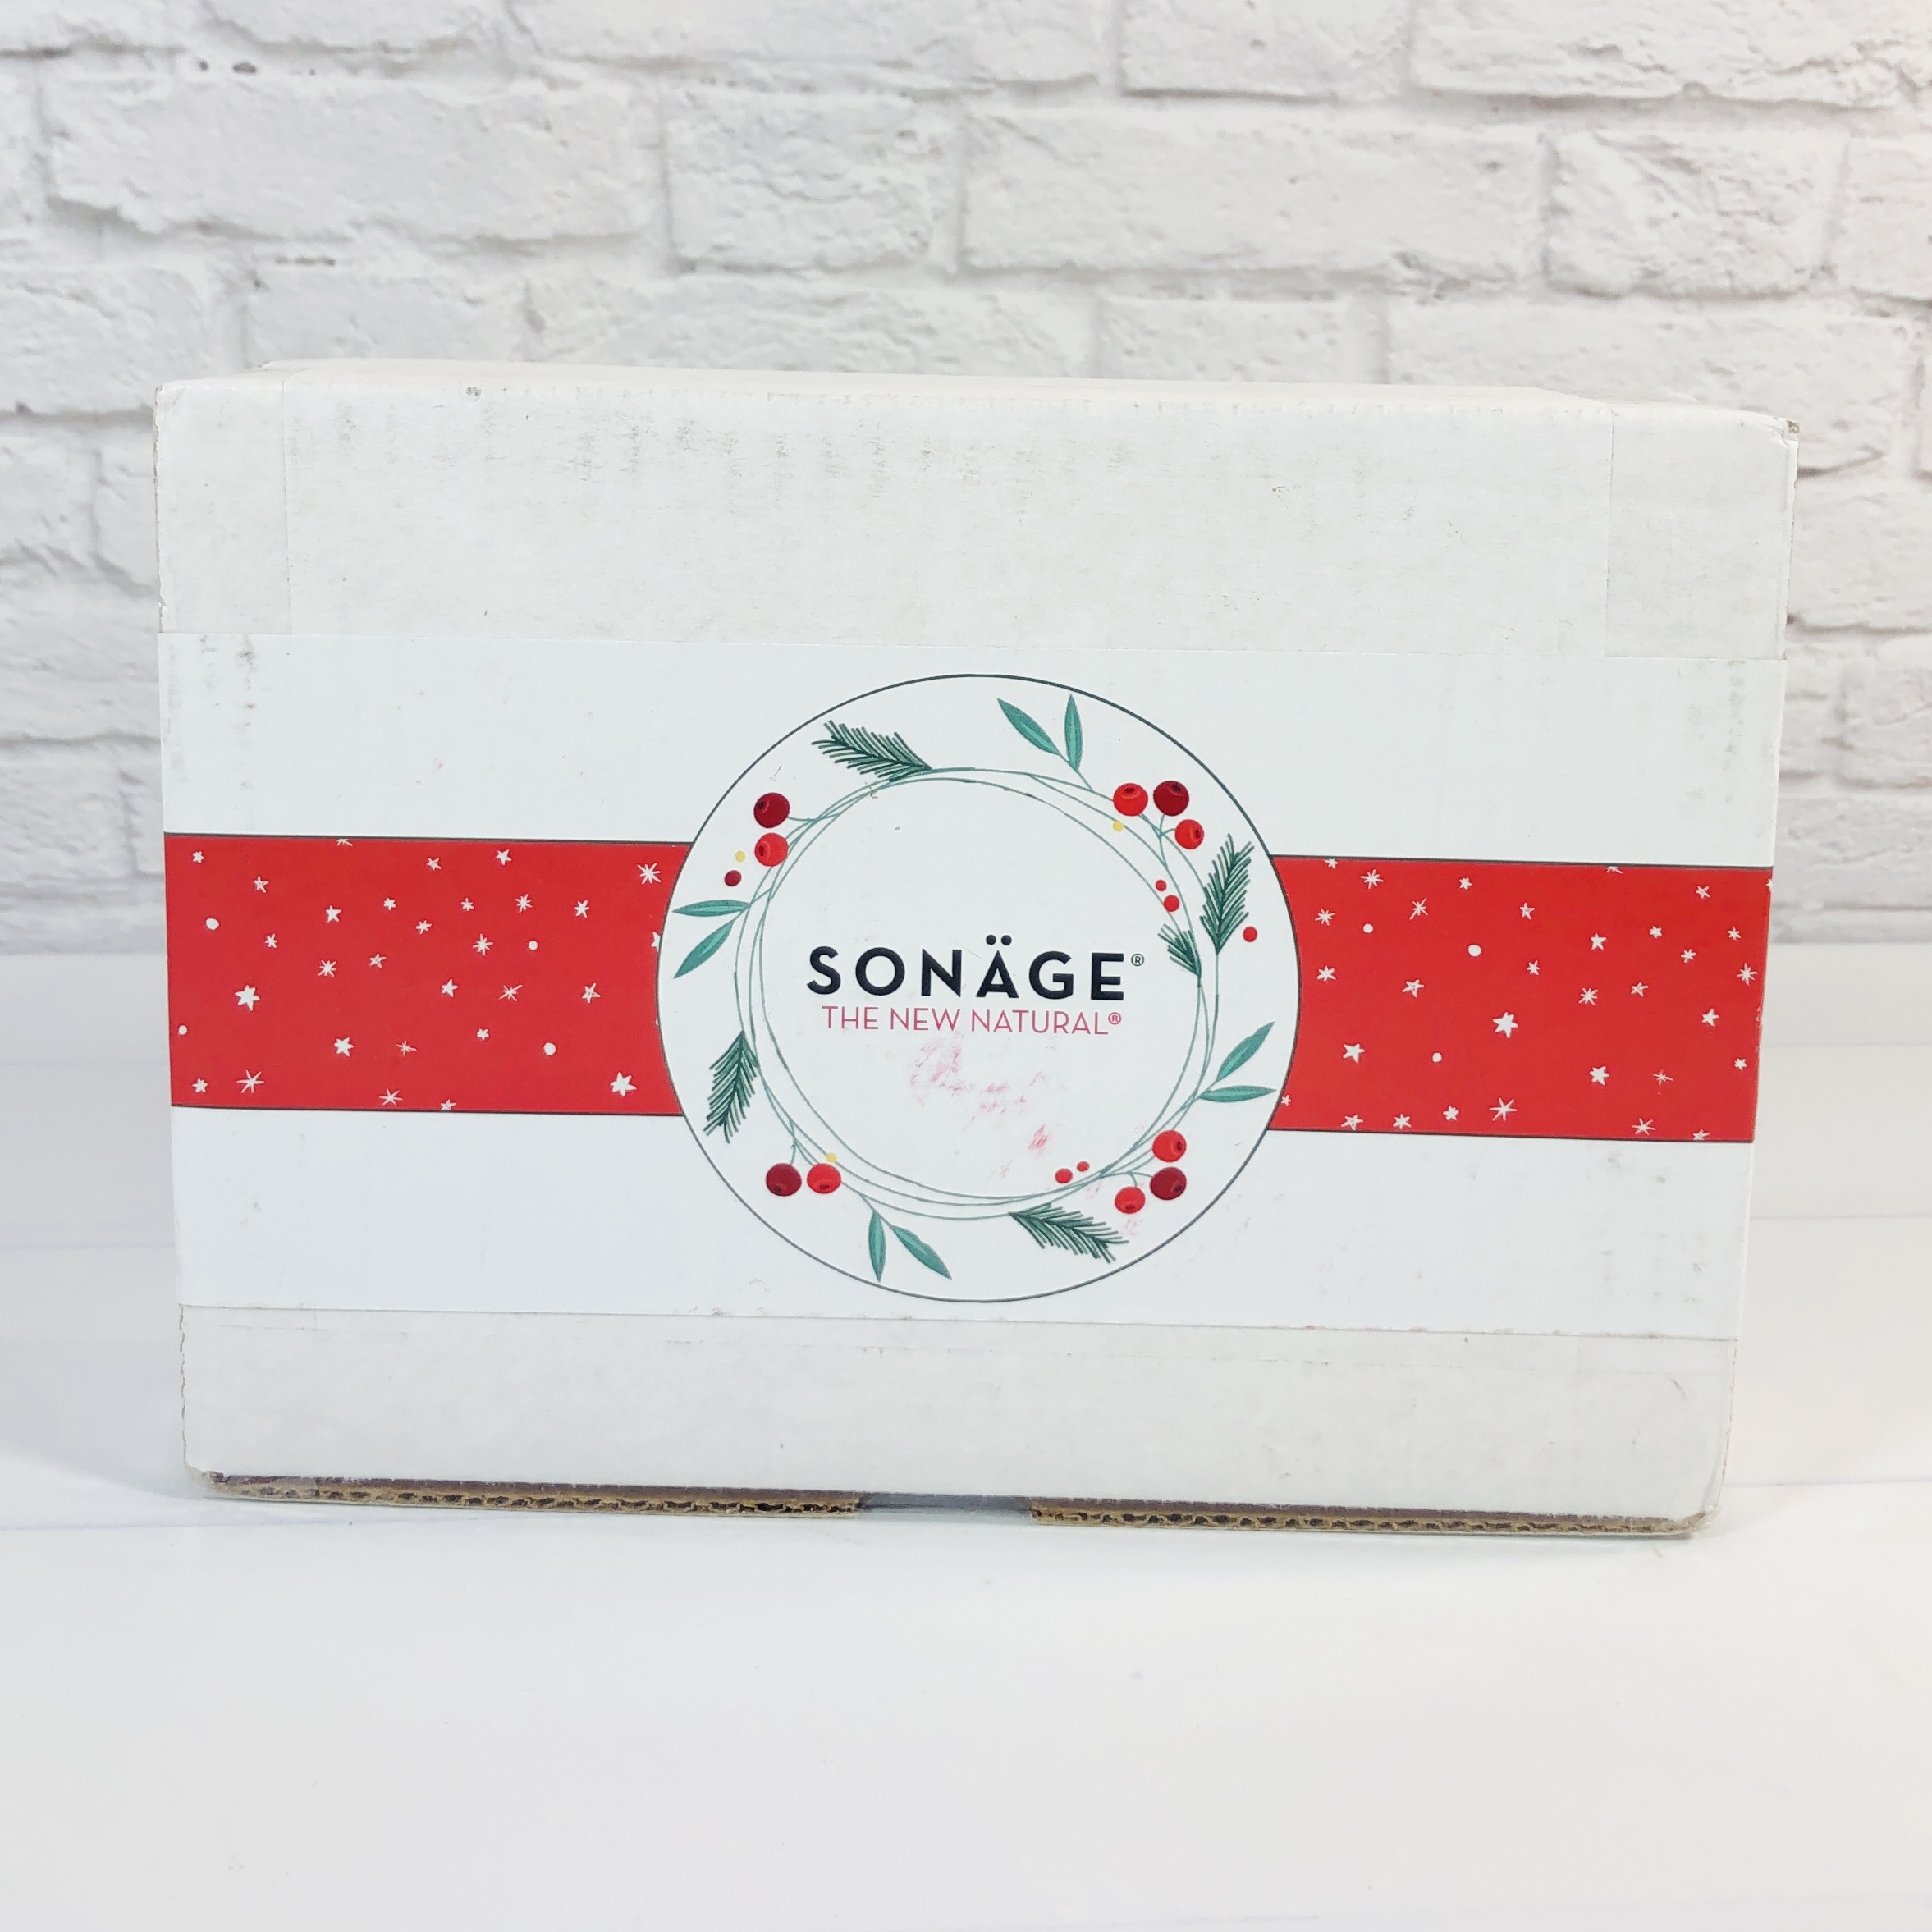  Sonage Skincare - Beauty Skincare Subscription Box